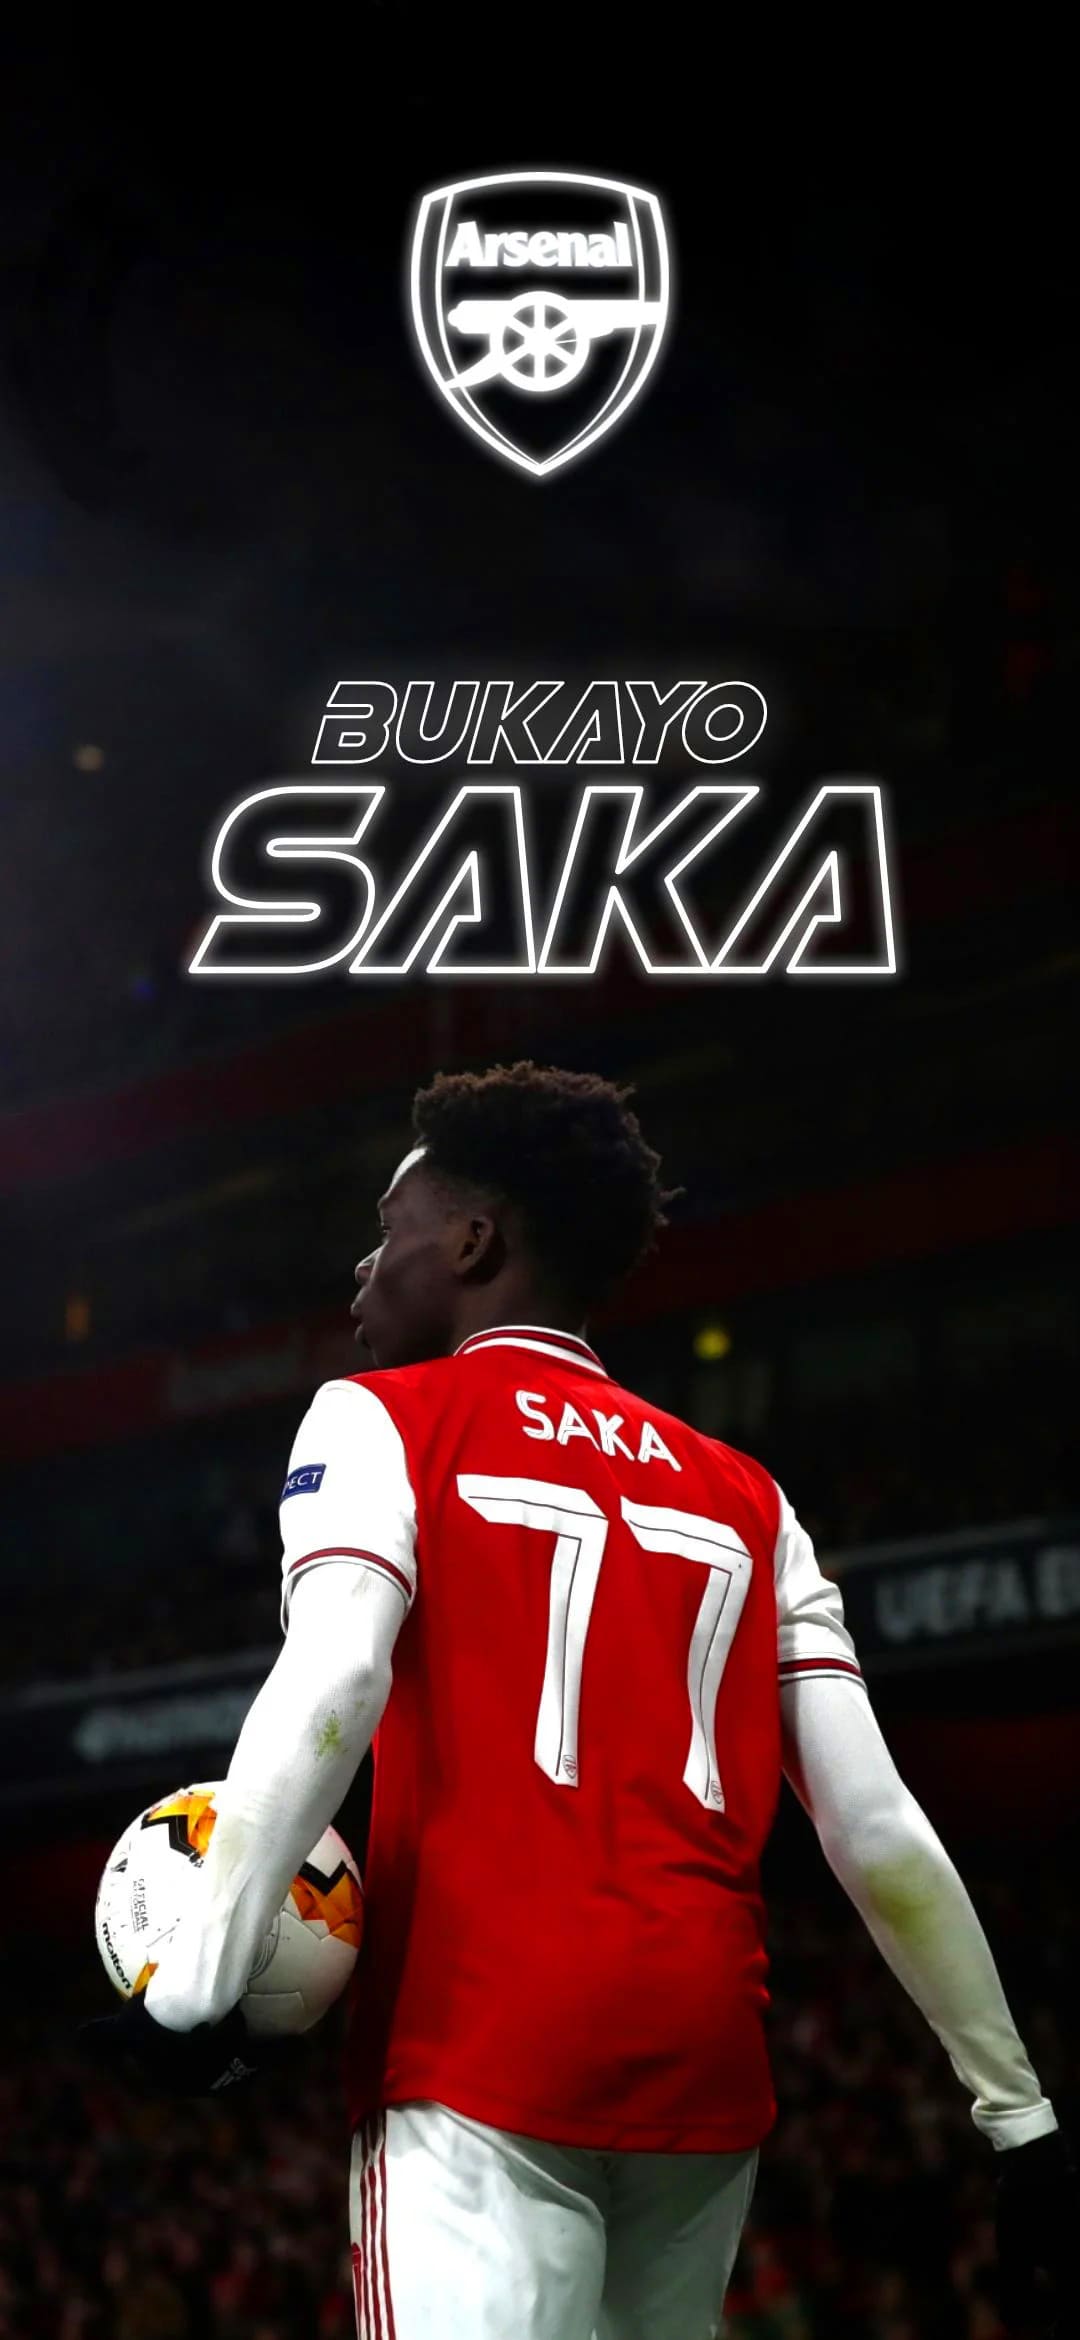 Bukayo Saka Wallpaper  Download to your mobile from PHONEKY